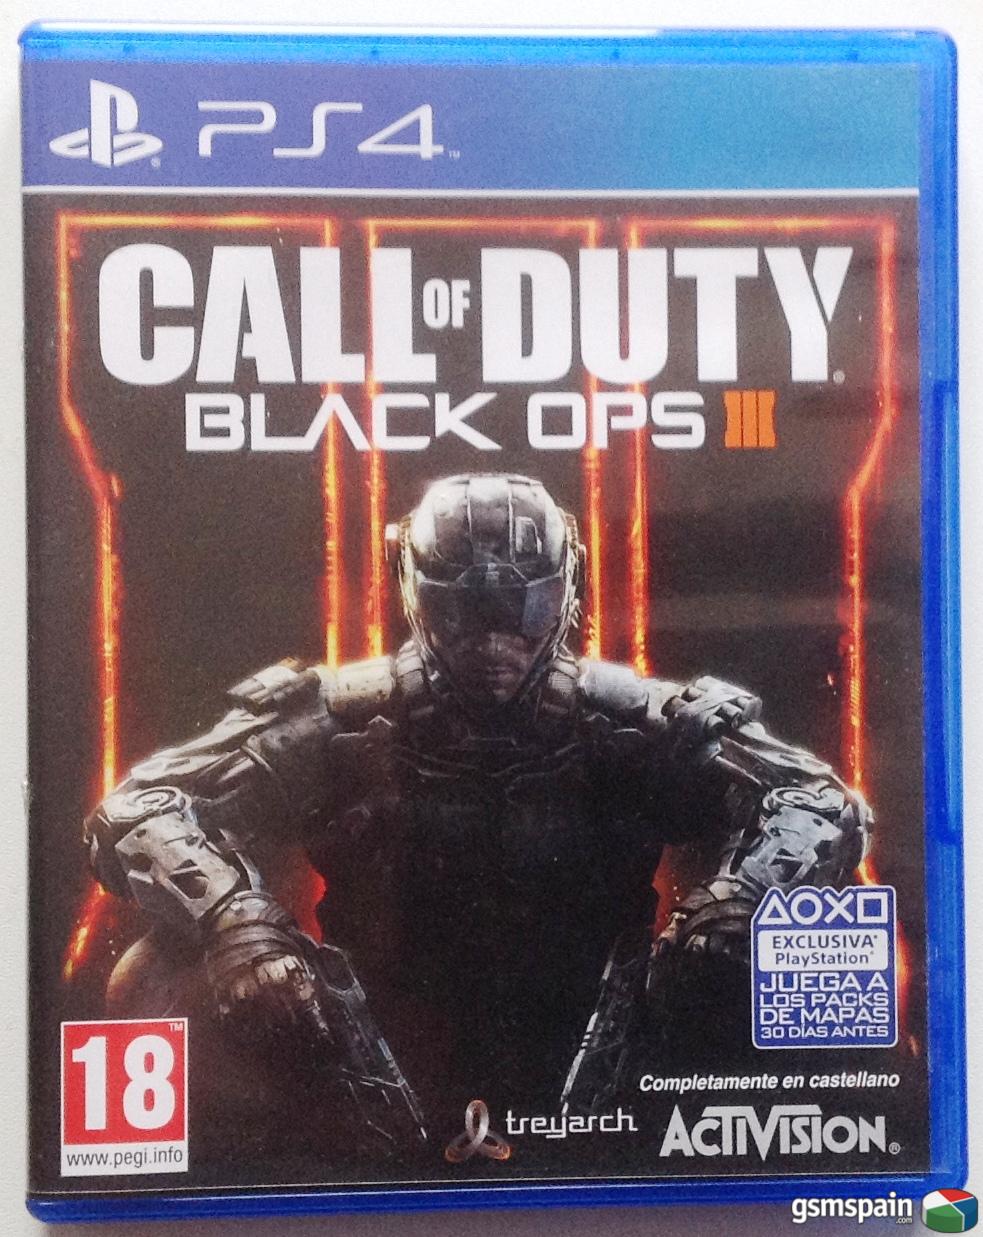 [VENDO] JUEGO Call of Duty Blakc Ops III para PS4.